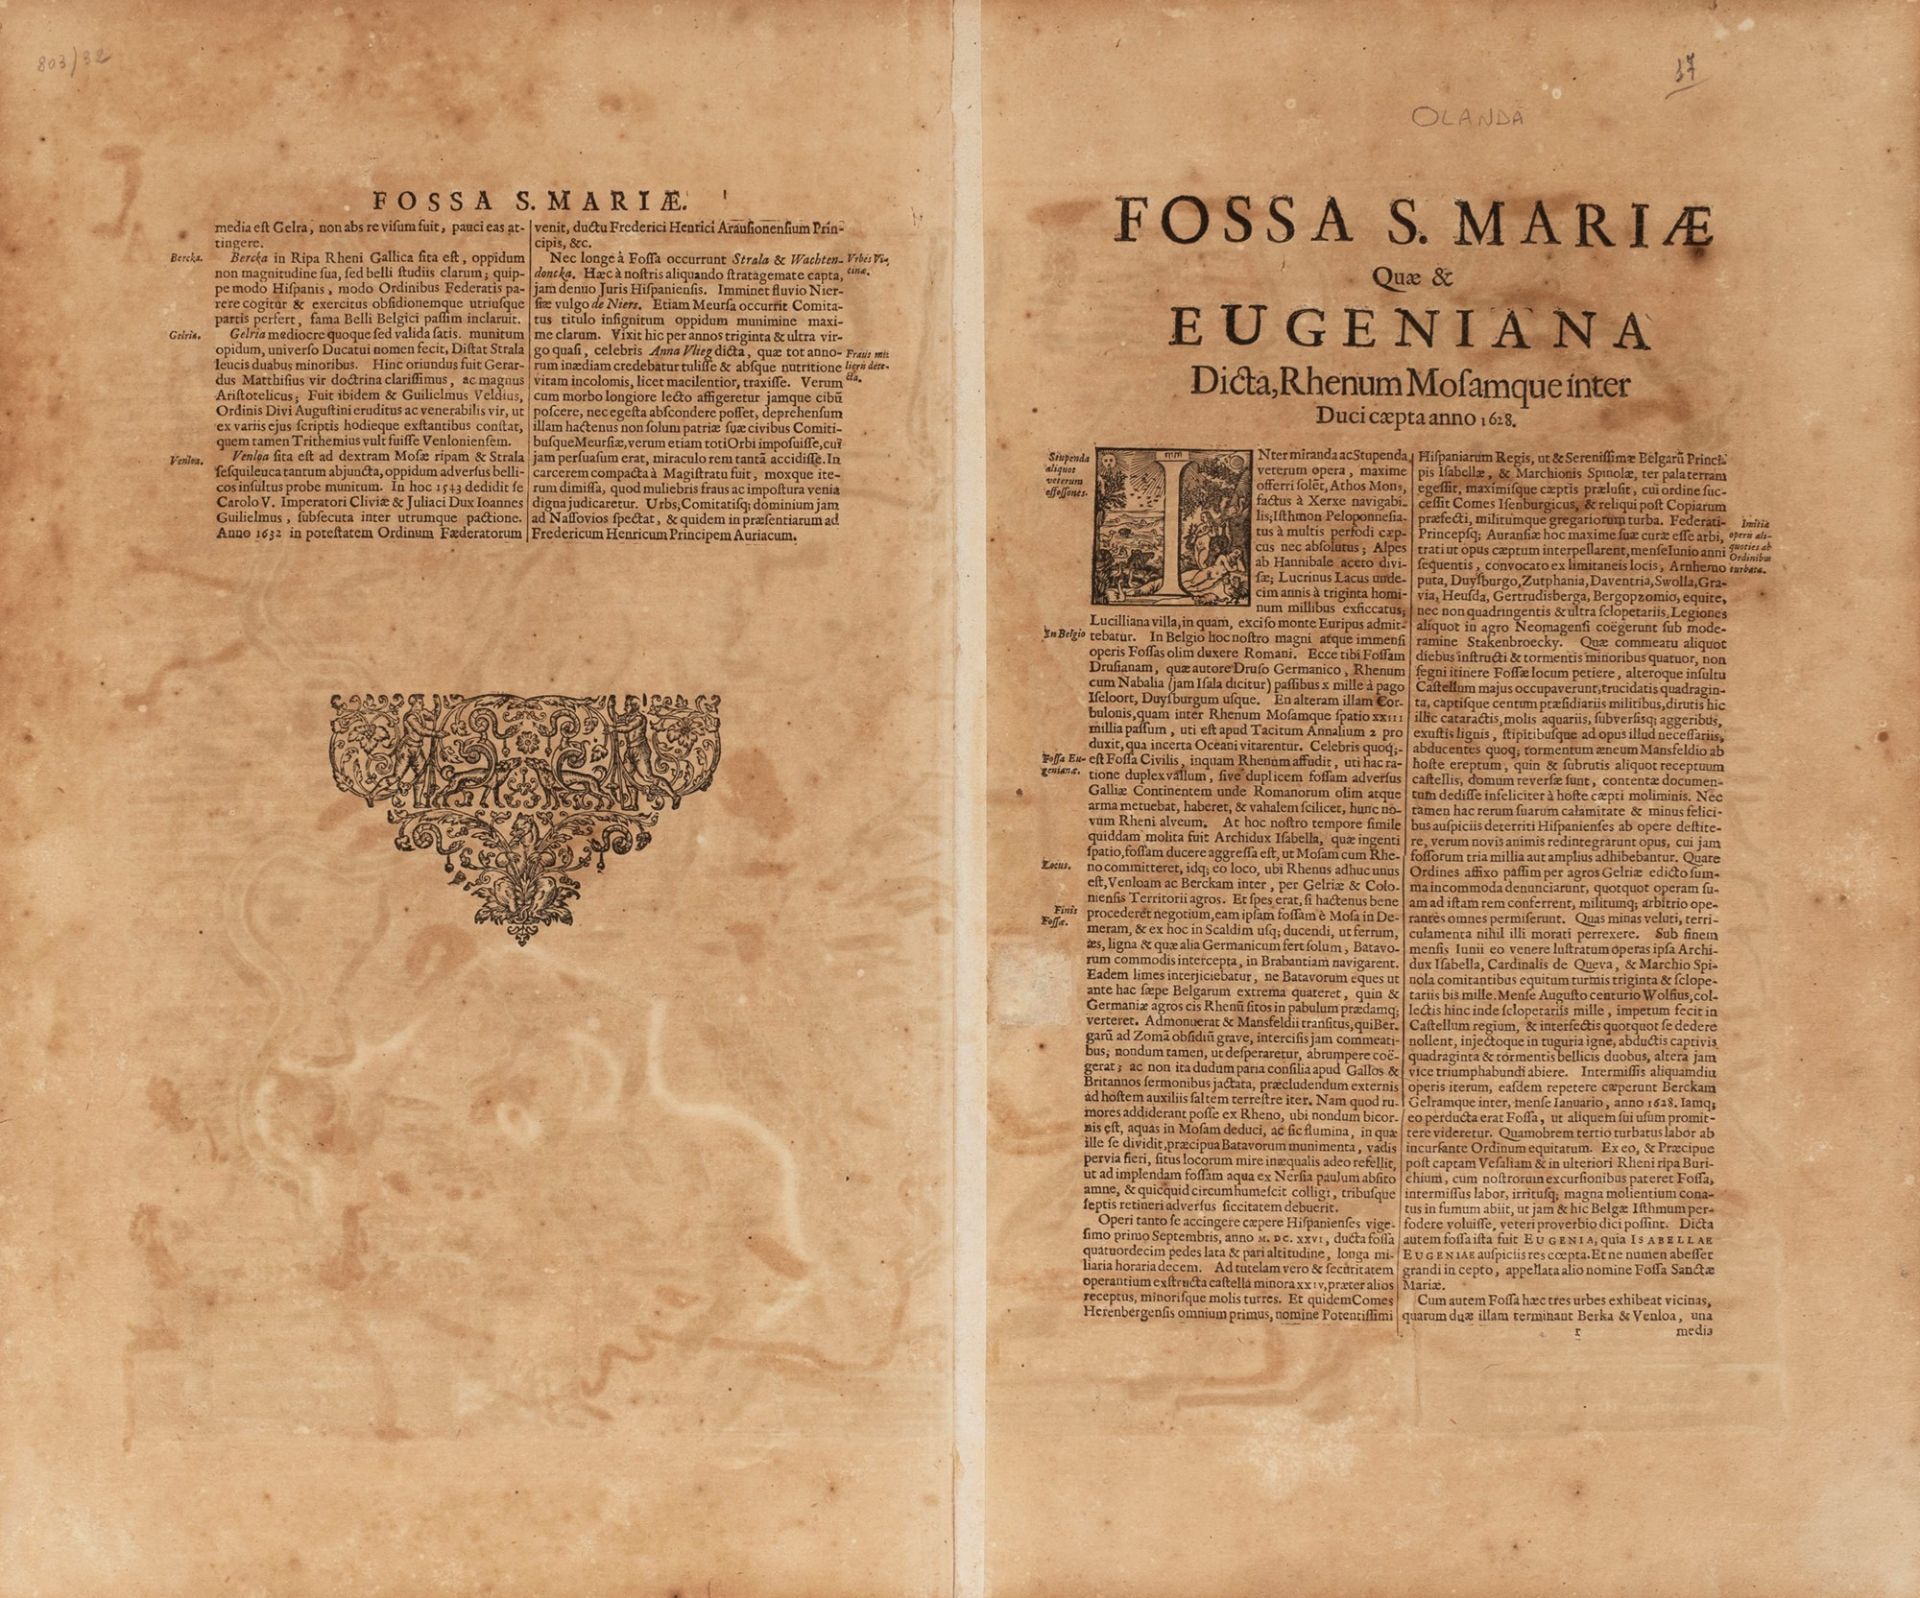 Germany - Hondius, Henricus - Fossa Eugeniana quae a Rheno AD Mosam duci coepta est, Anno MDCXXVII d - Image 2 of 2